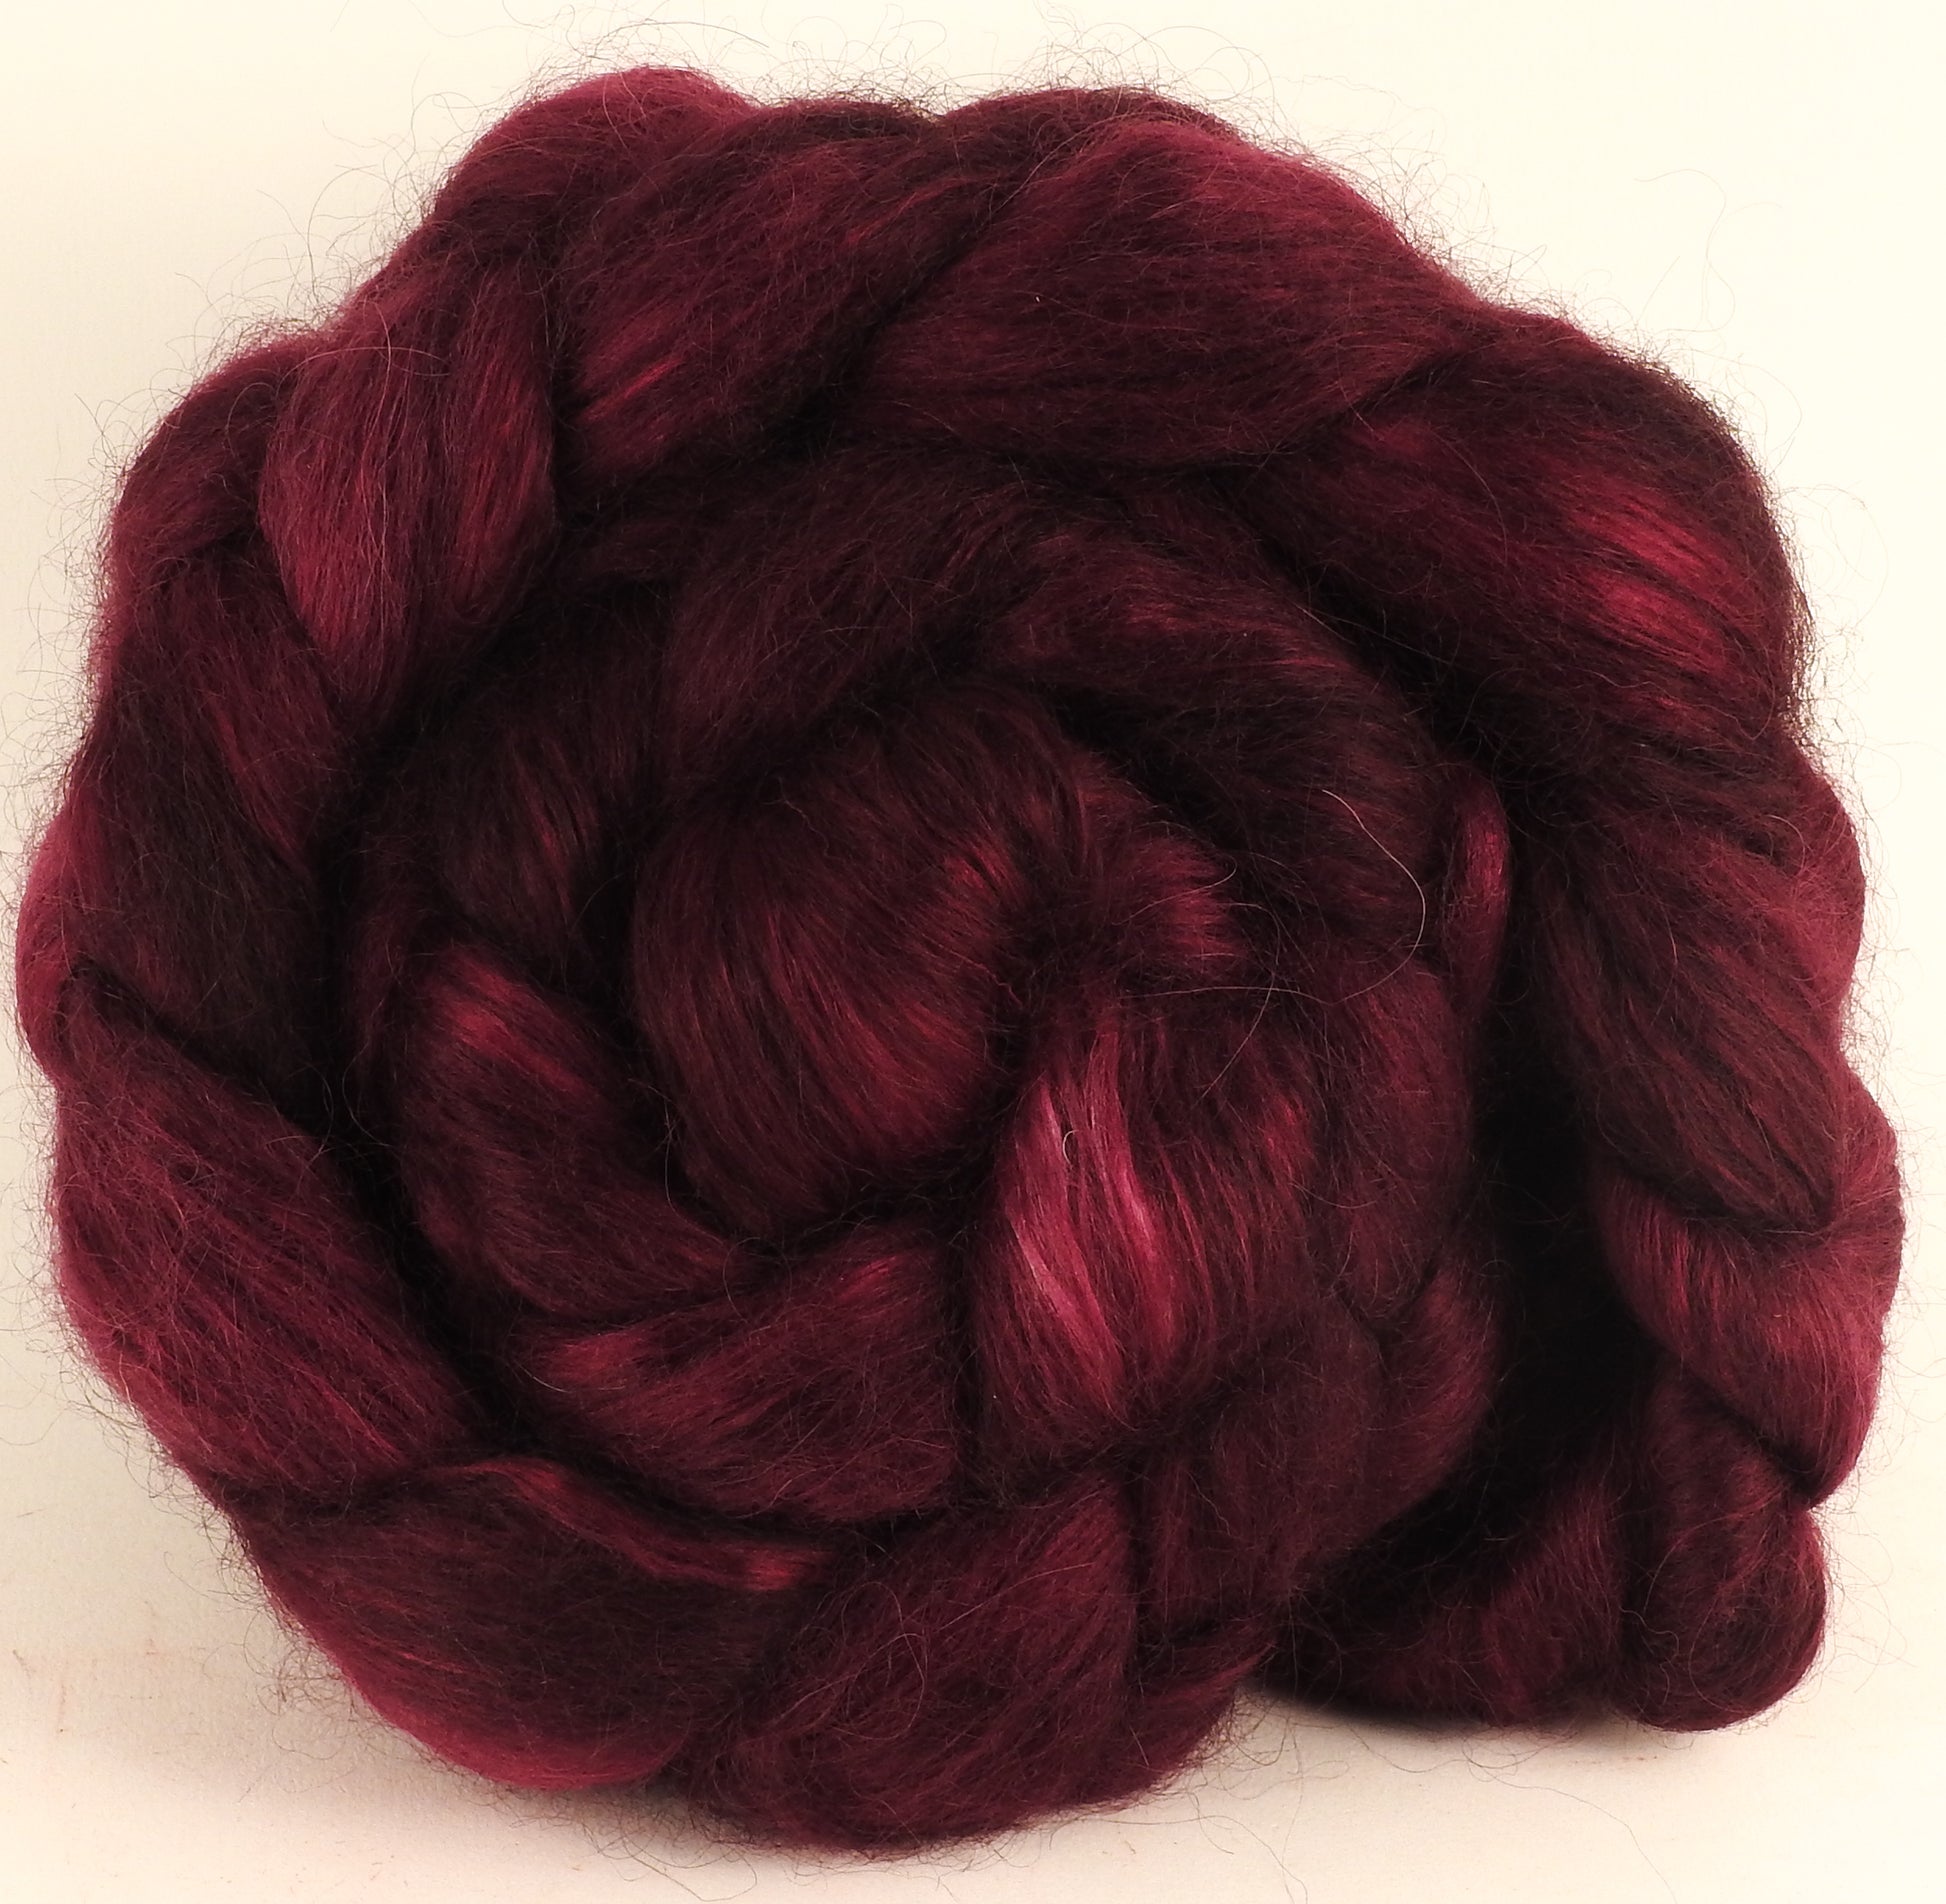 Hand-dyed wensleydale/ mulberry silk roving (65/35) - Black Cherry - (5.7 oz.) - Inglenook Fibers